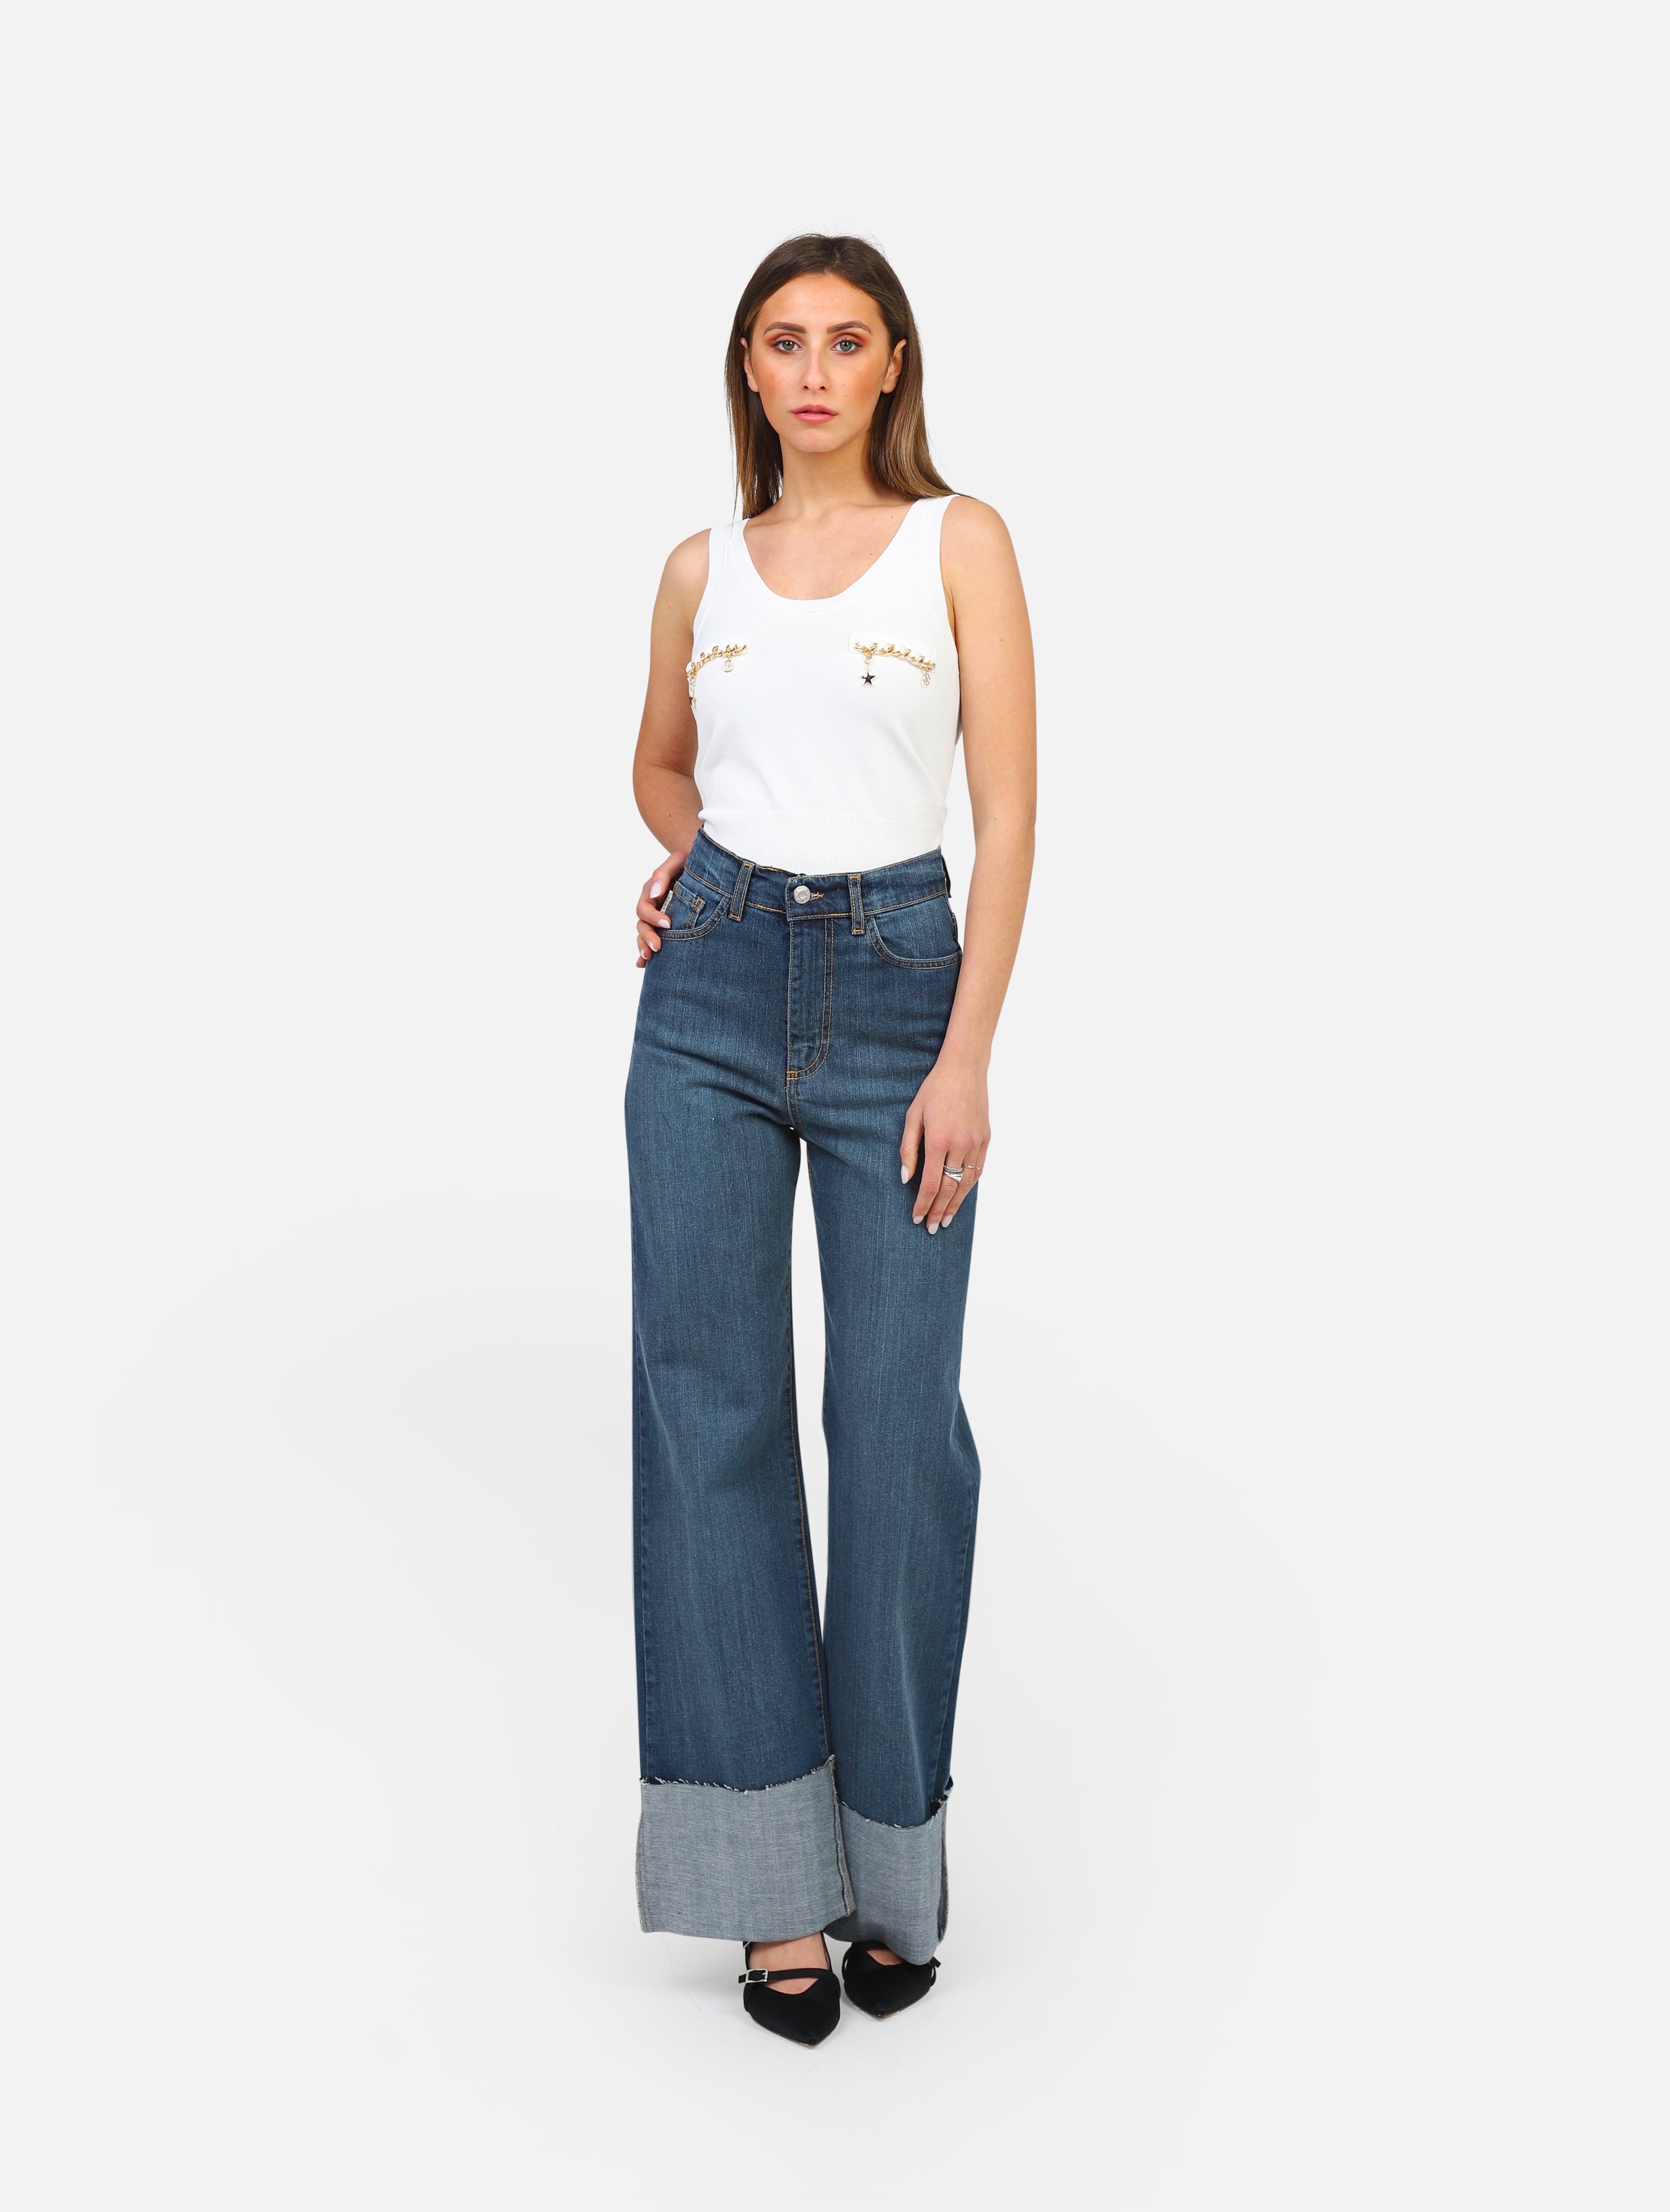 Jeans haveone -  denim woman  - 6